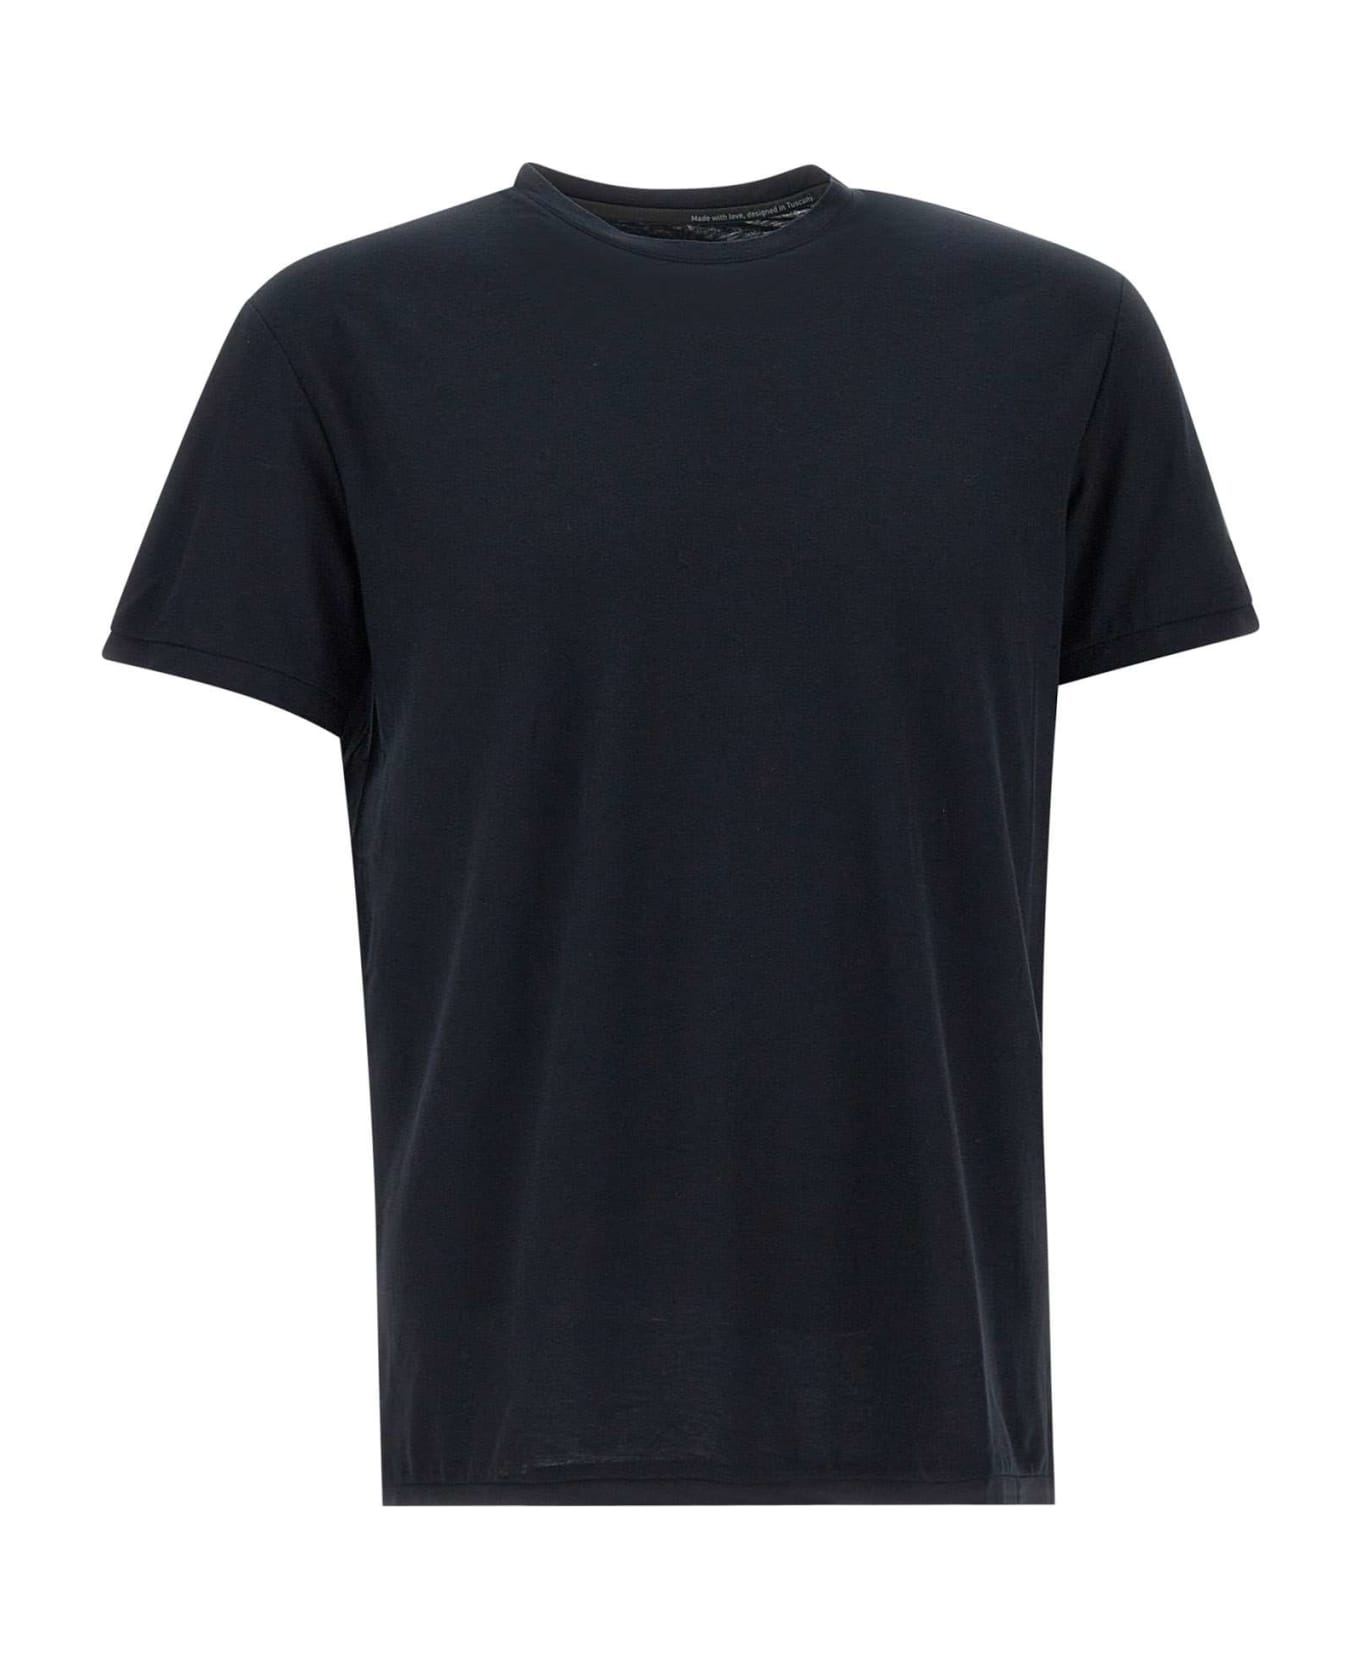 RRD - Roberto Ricci Design 'shirty Crepe' Cotton T-shirt - Blue Black